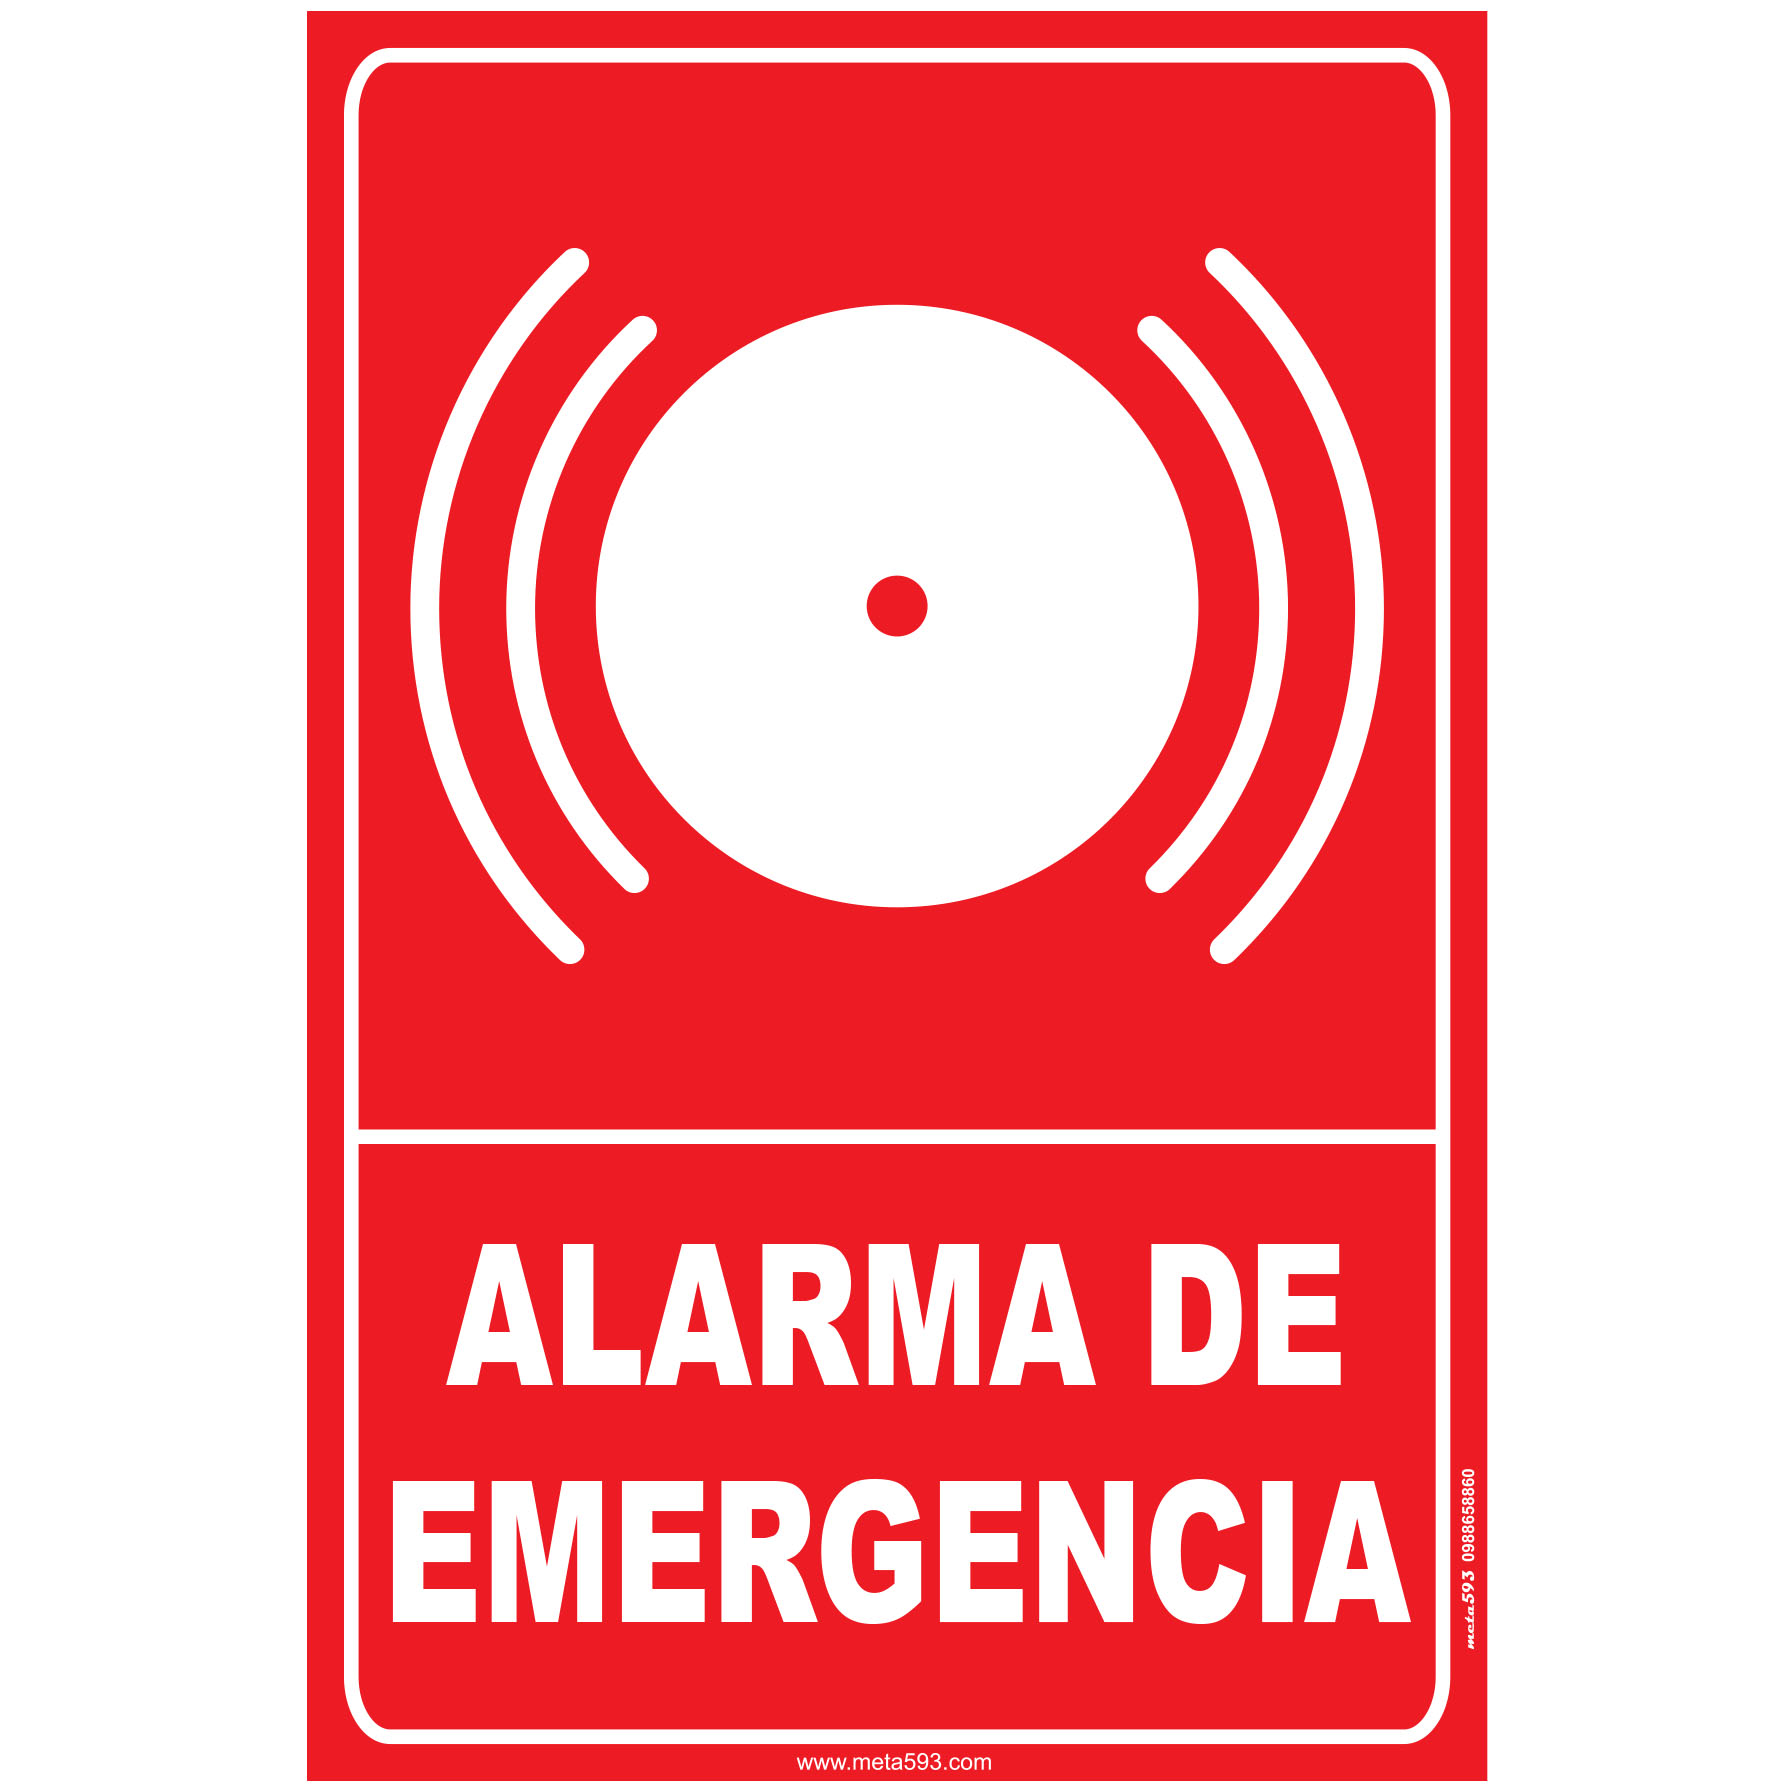 Alarma emergencia – META593